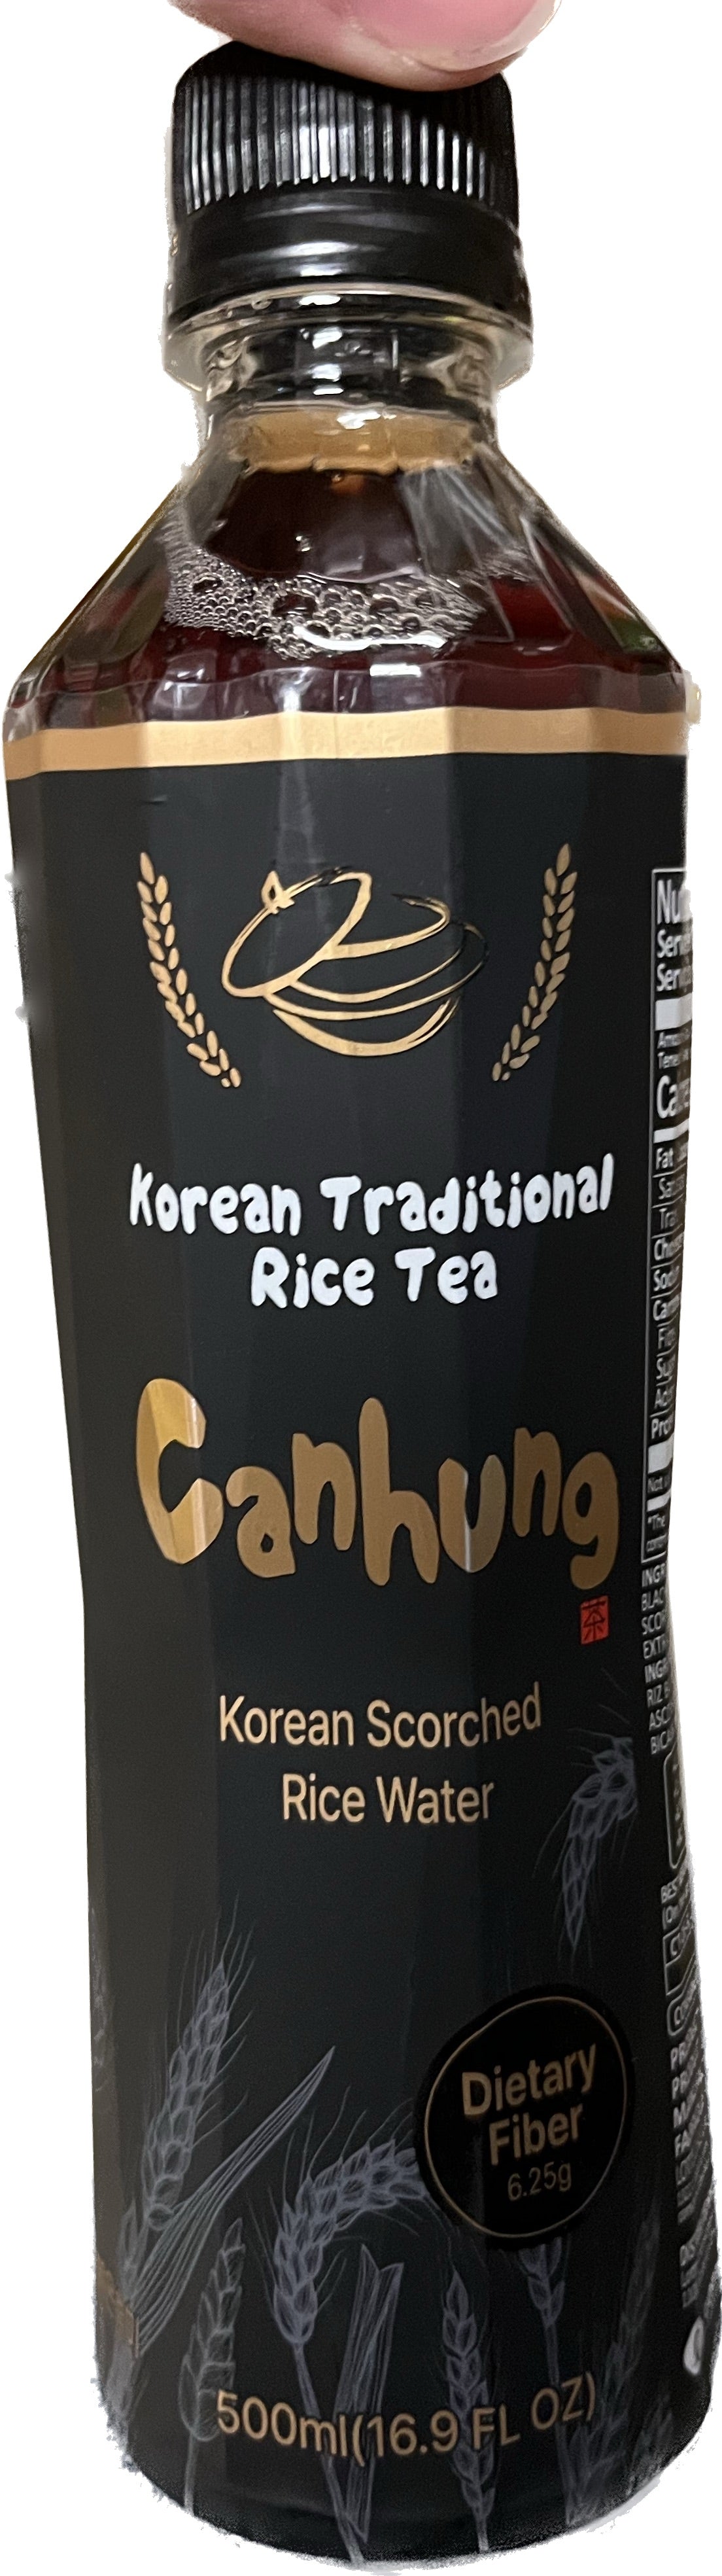 Canhung Korean Traditional Rice Tea